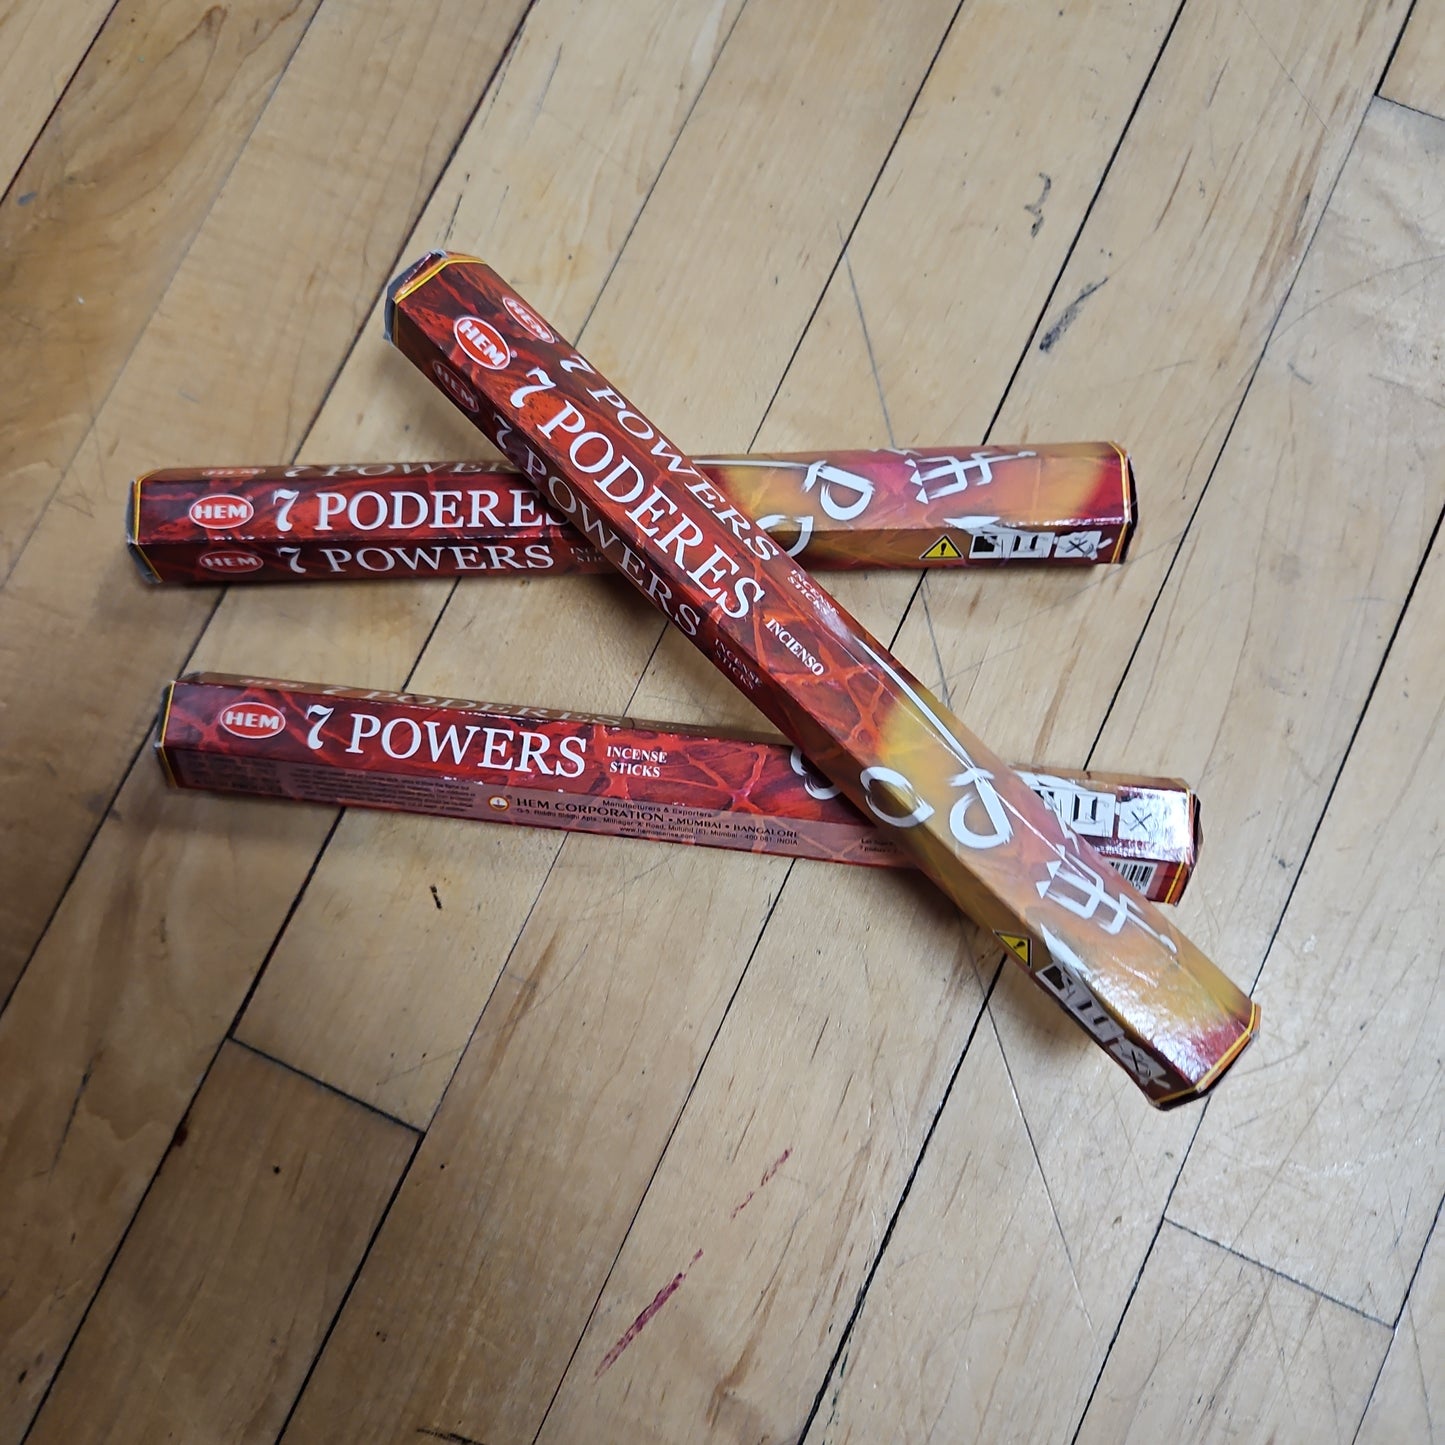 HEM 7 Powers Incense Sticks - 20 Pack ( 7 PODERES )